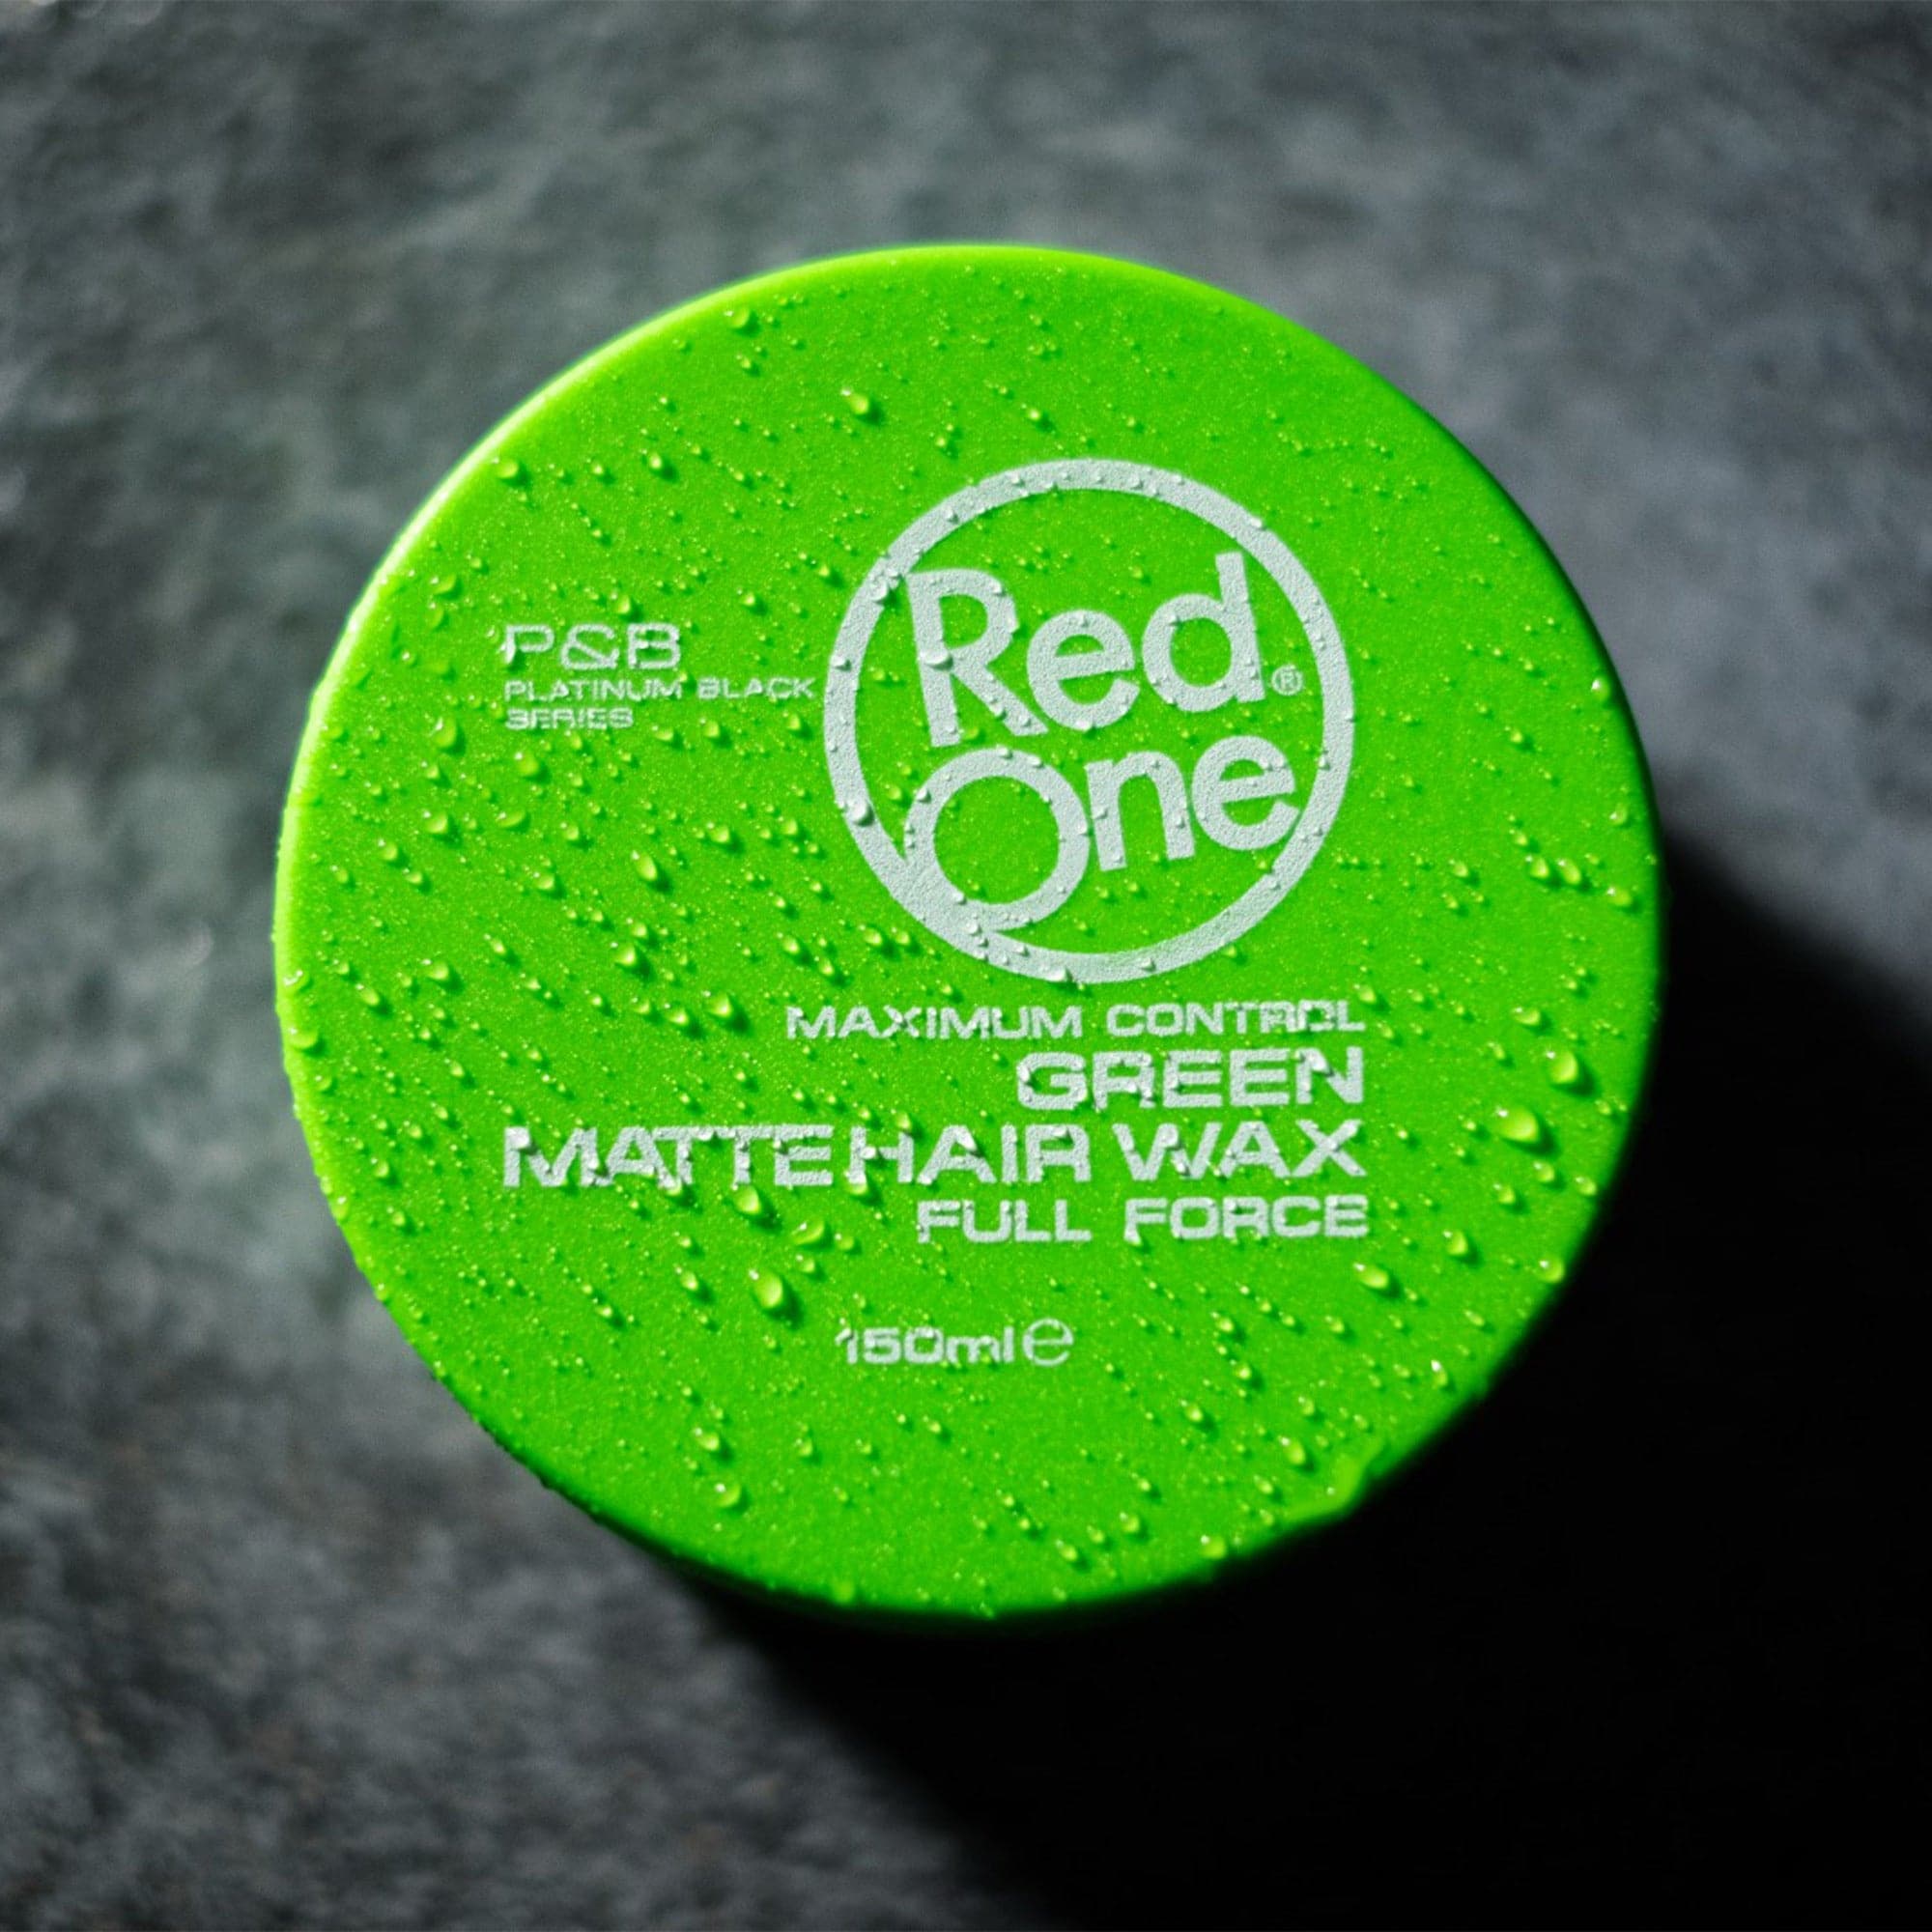 Redone - Matte Hair Wax Green Full Force Maximum Control 150ml